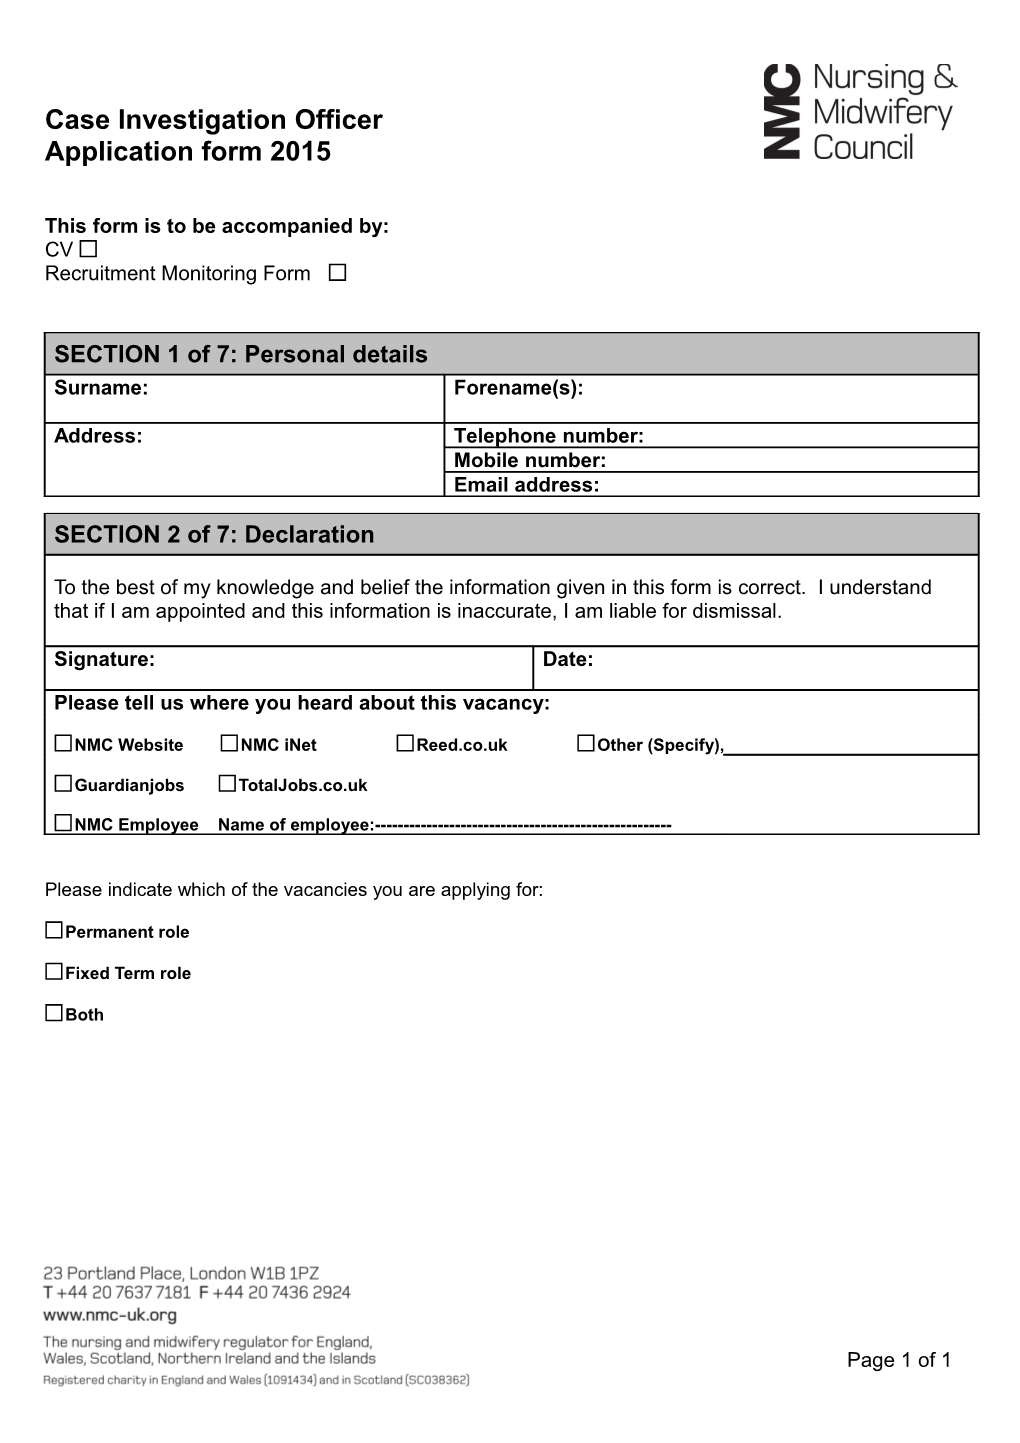 Case Investigation Officer Application Form February 2012